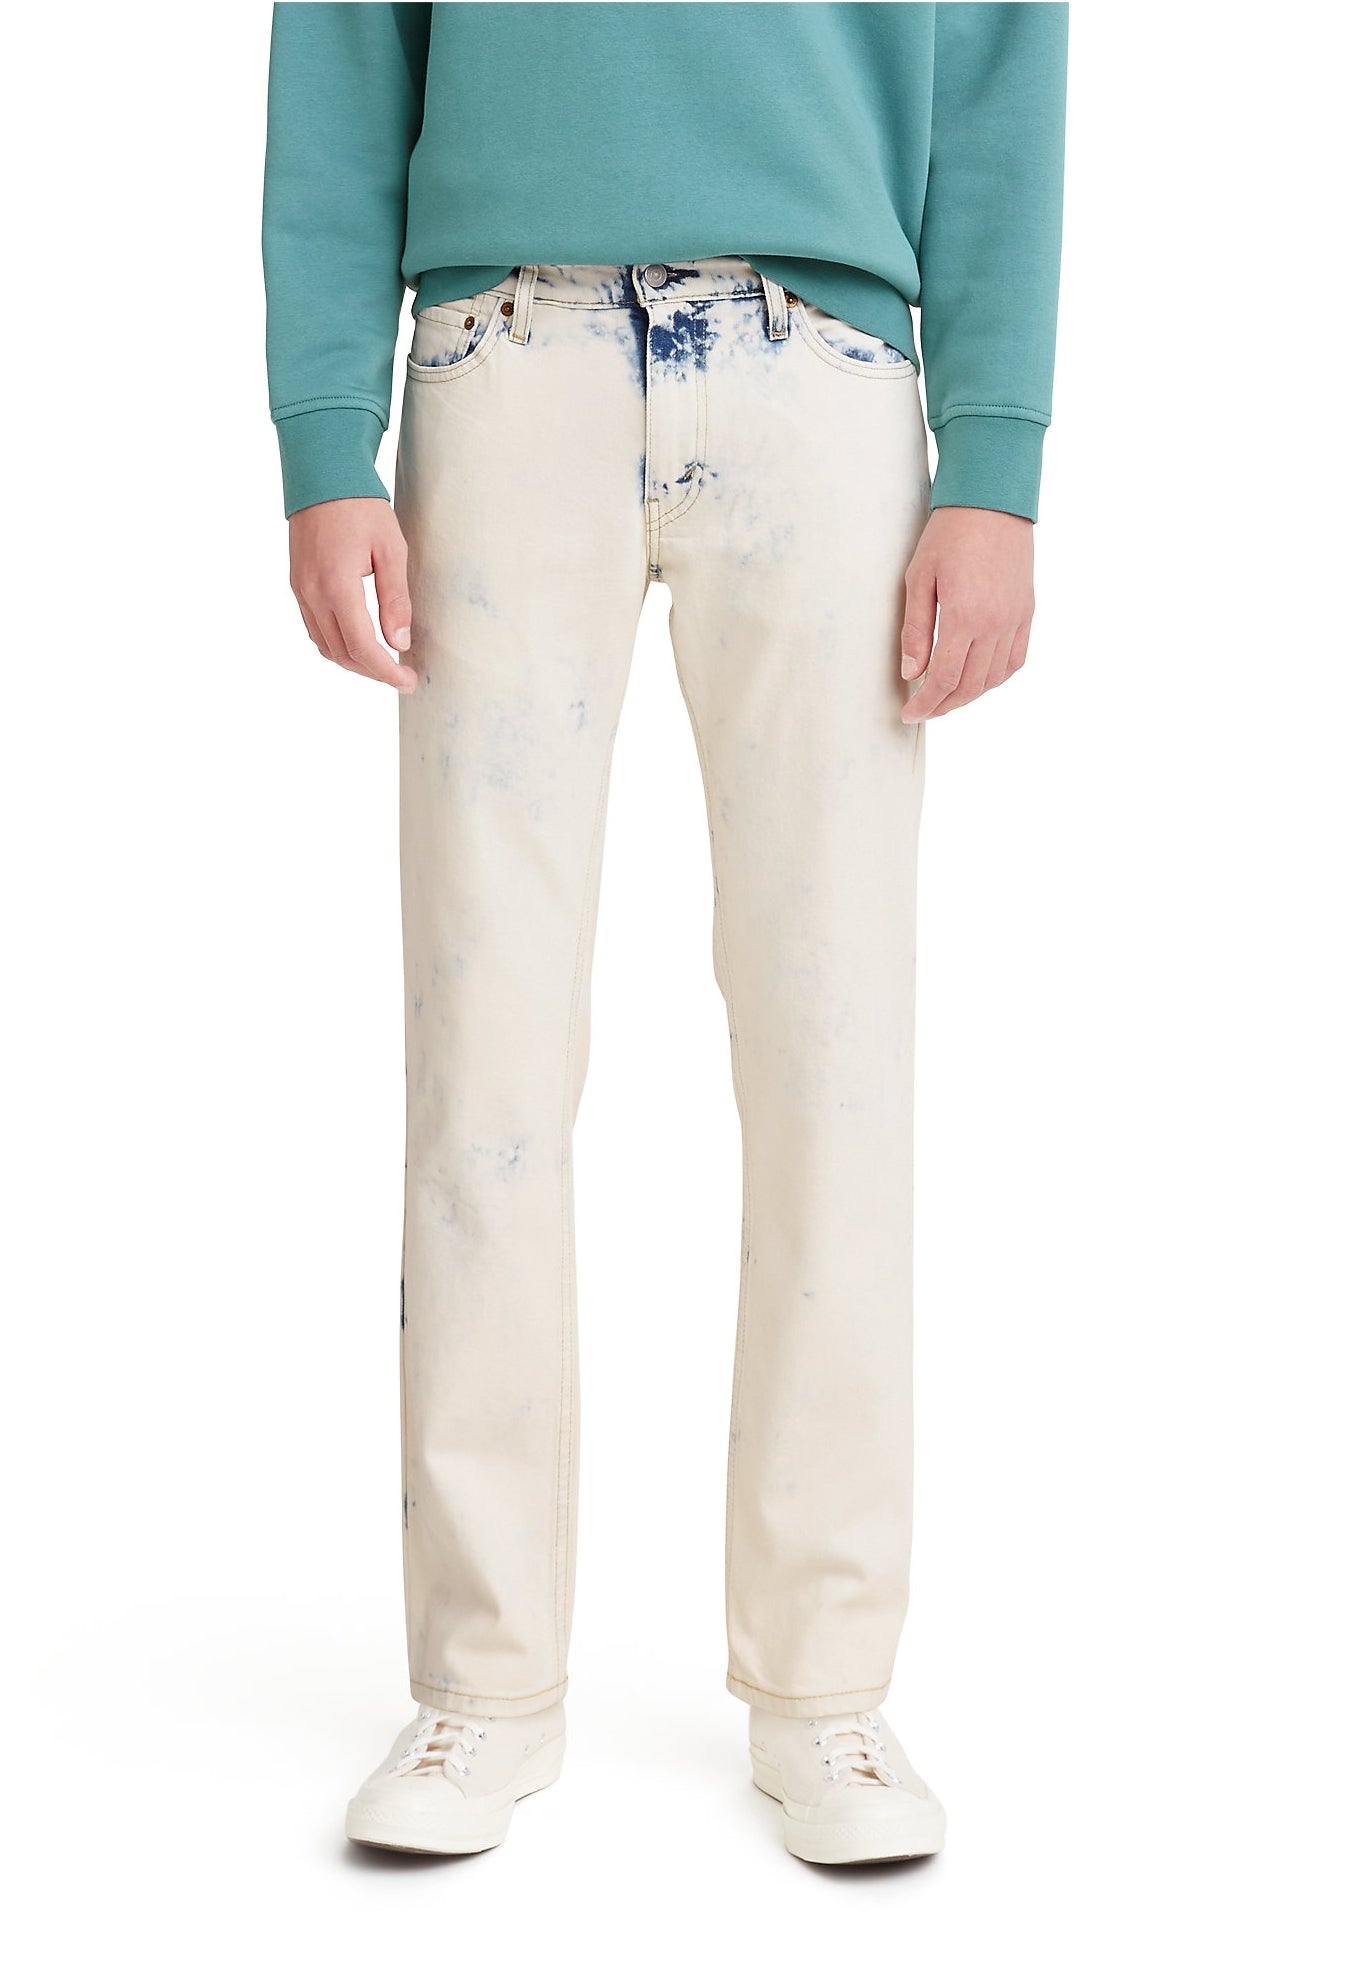 pantalones-jeans-levis-511-slim-p-caballeros-1